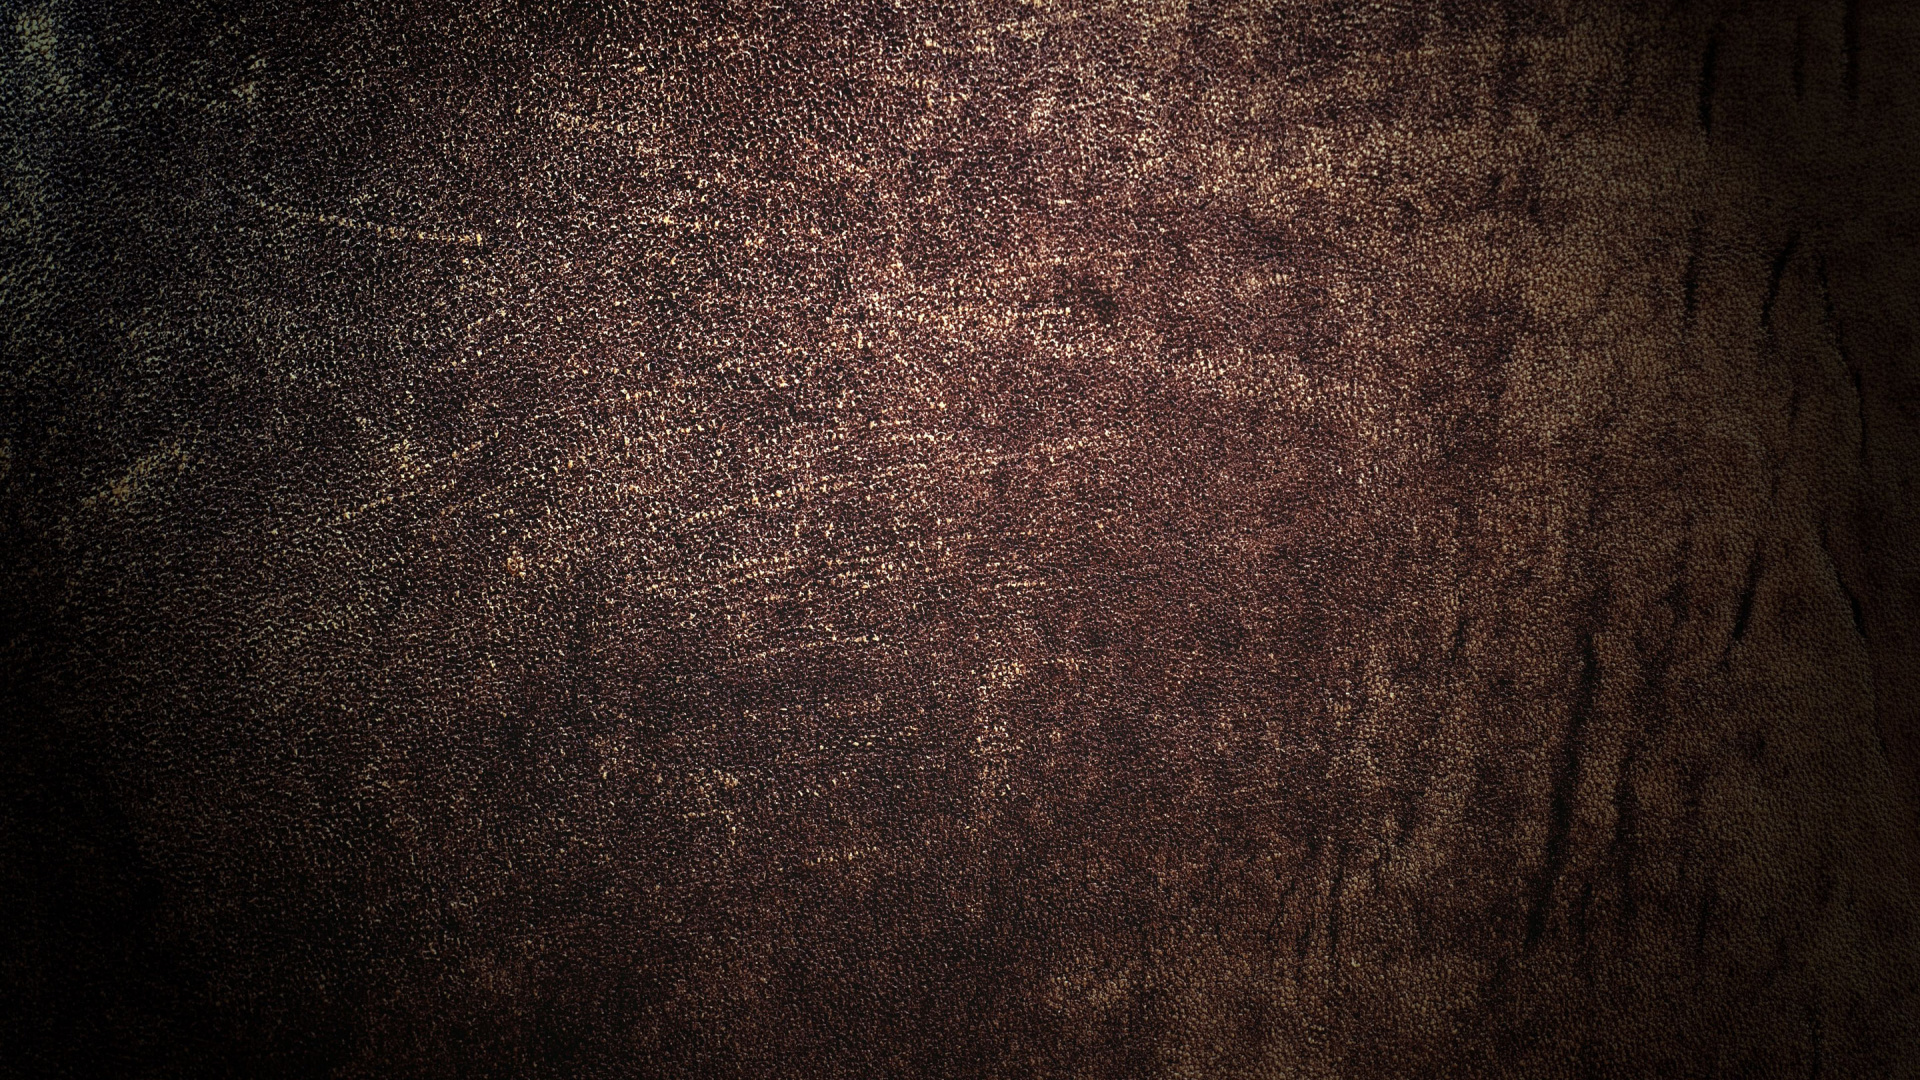 Textile Noir en Gros Plan Image. Wallpaper in 1920x1080 Resolution